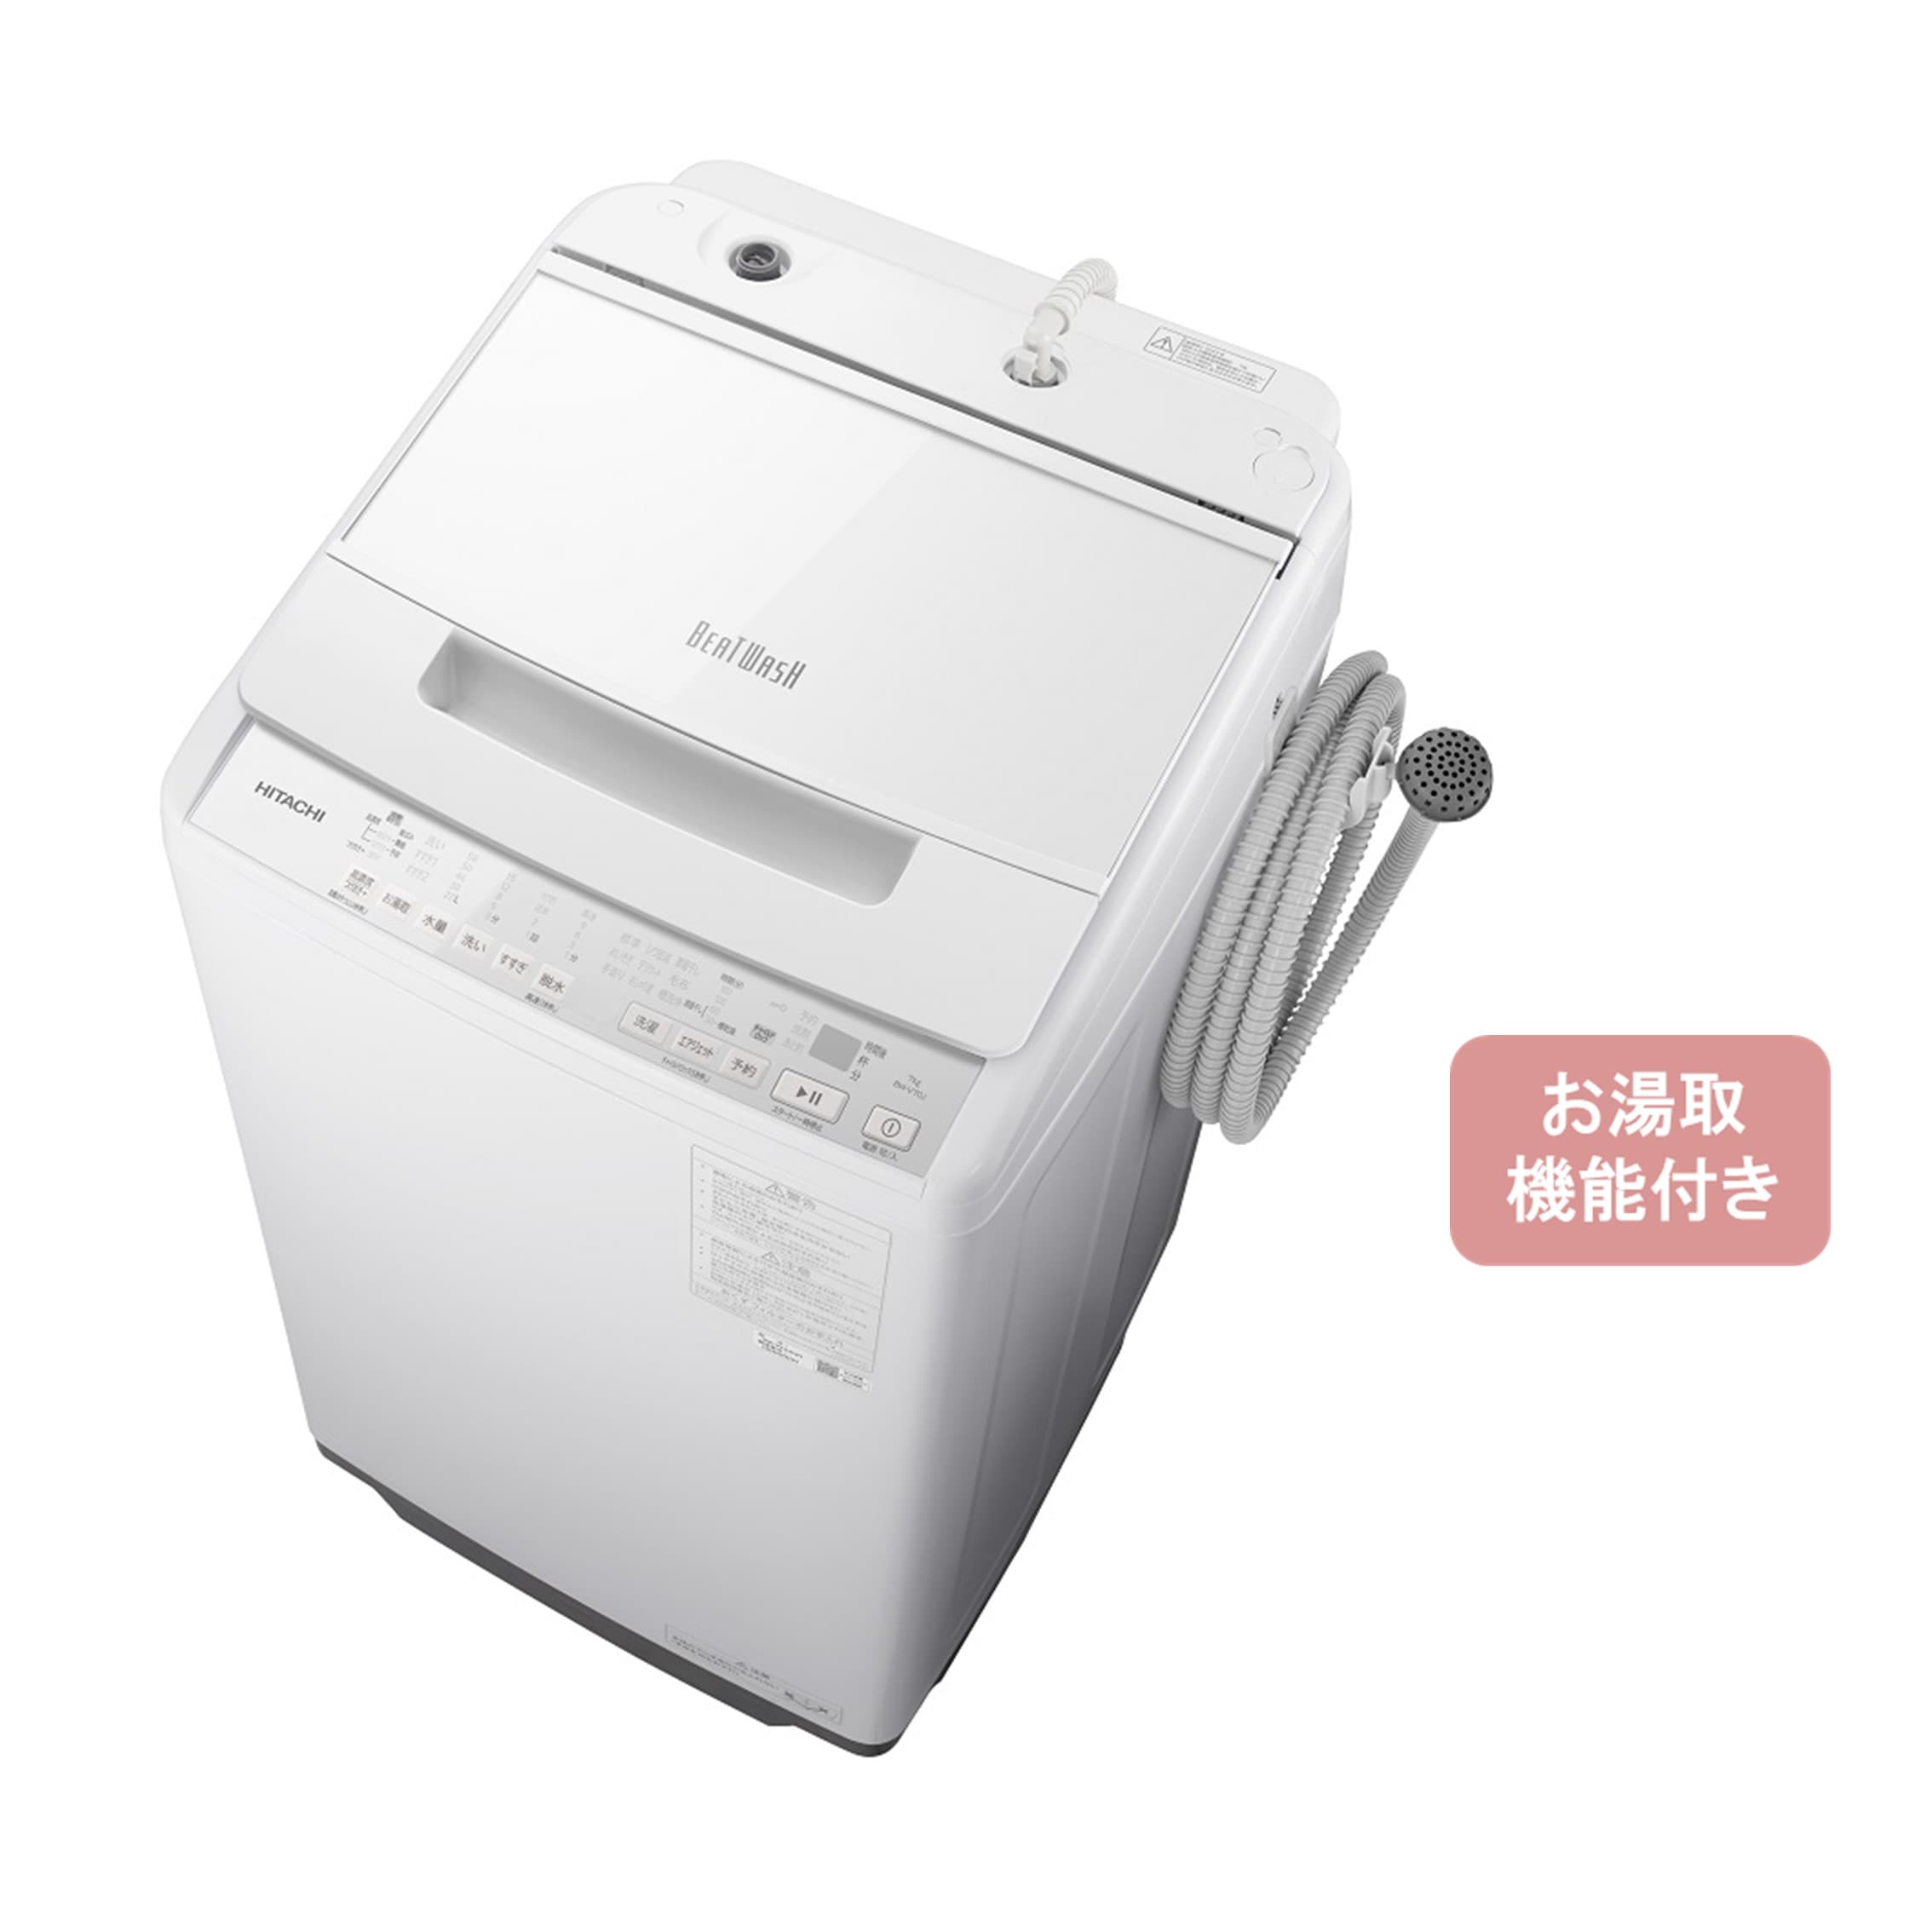 52 HITACHI 白い約束 7kg 全自動洗濯機 NW-R701 2013年製 - 生活家電